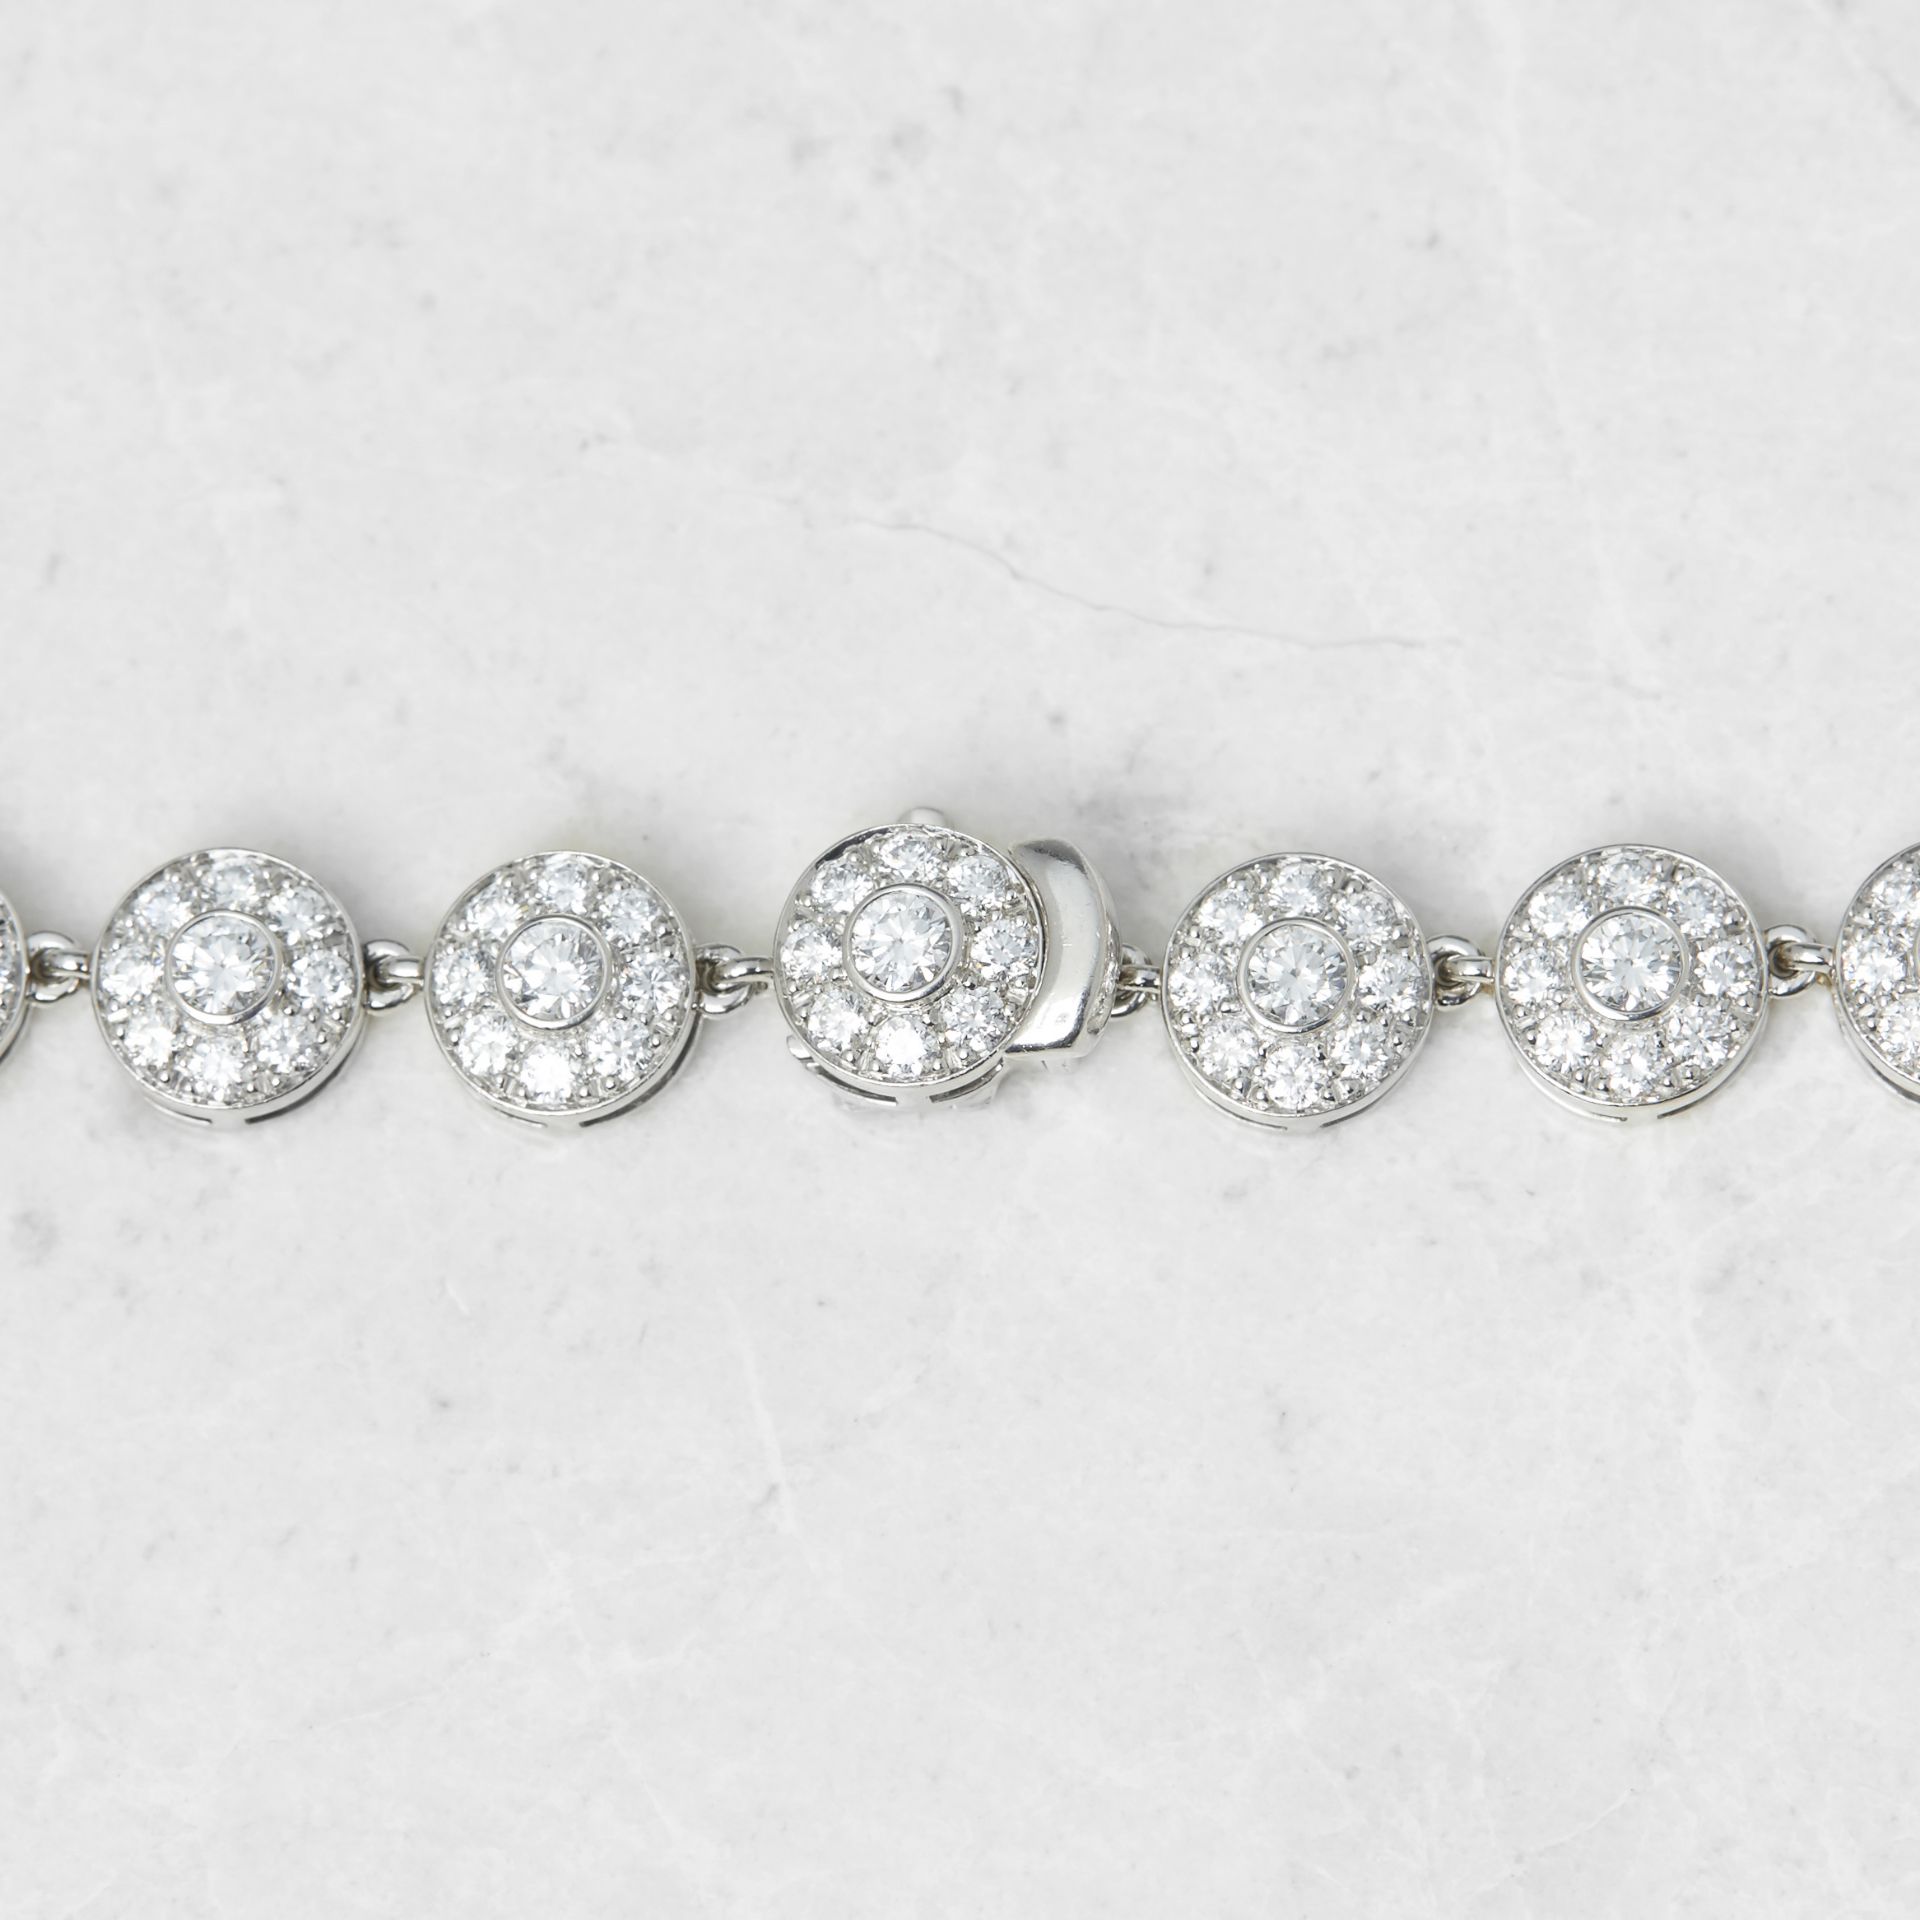 Tiffany & Co. Platinum 6.44ct Diamond Circlet Necklace with Tiffany & Co. Box - Image 9 of 14